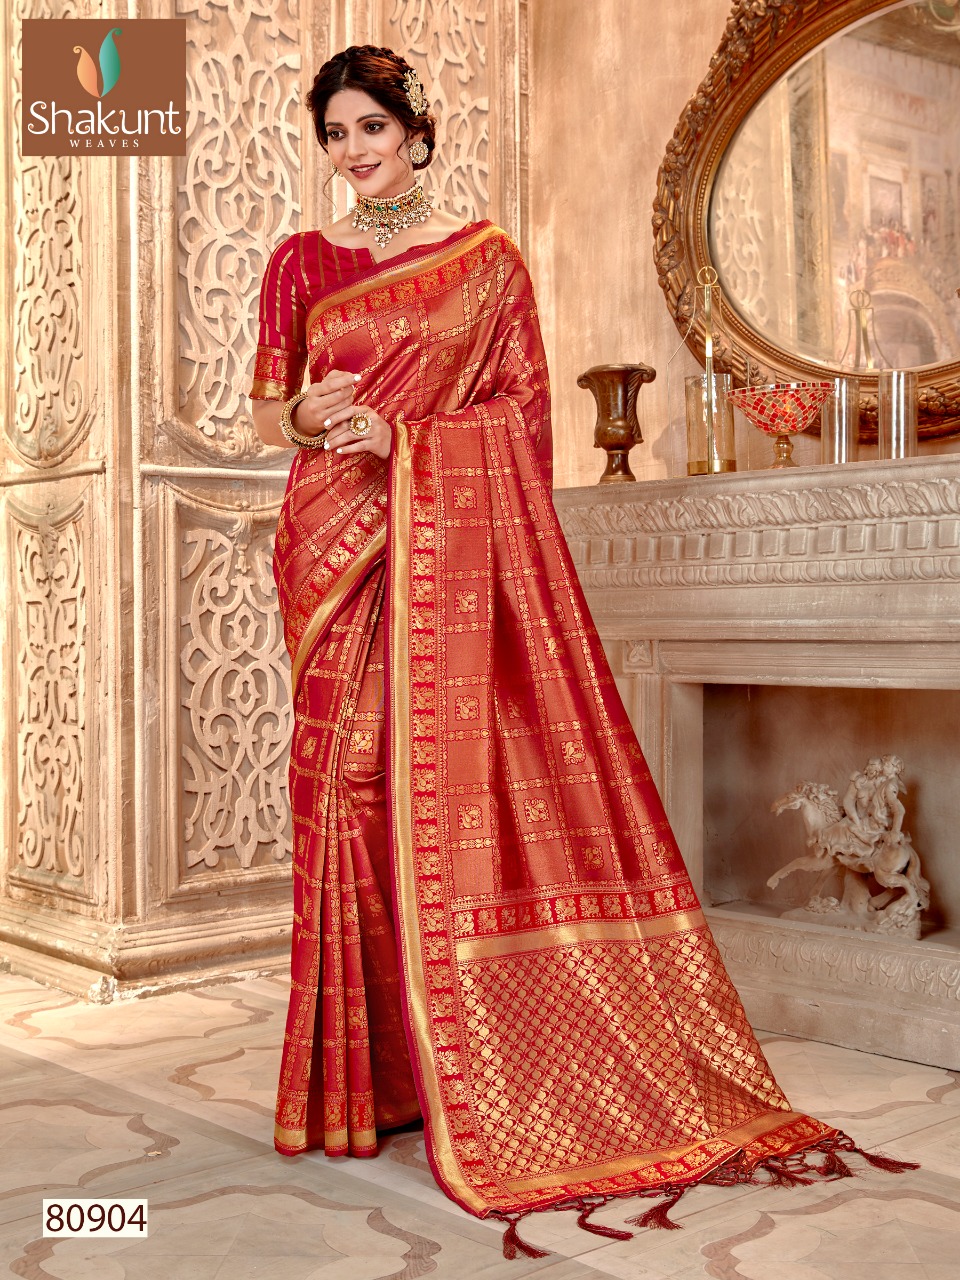 Shakunt presents alakhnanda beautiful printed sarees collection